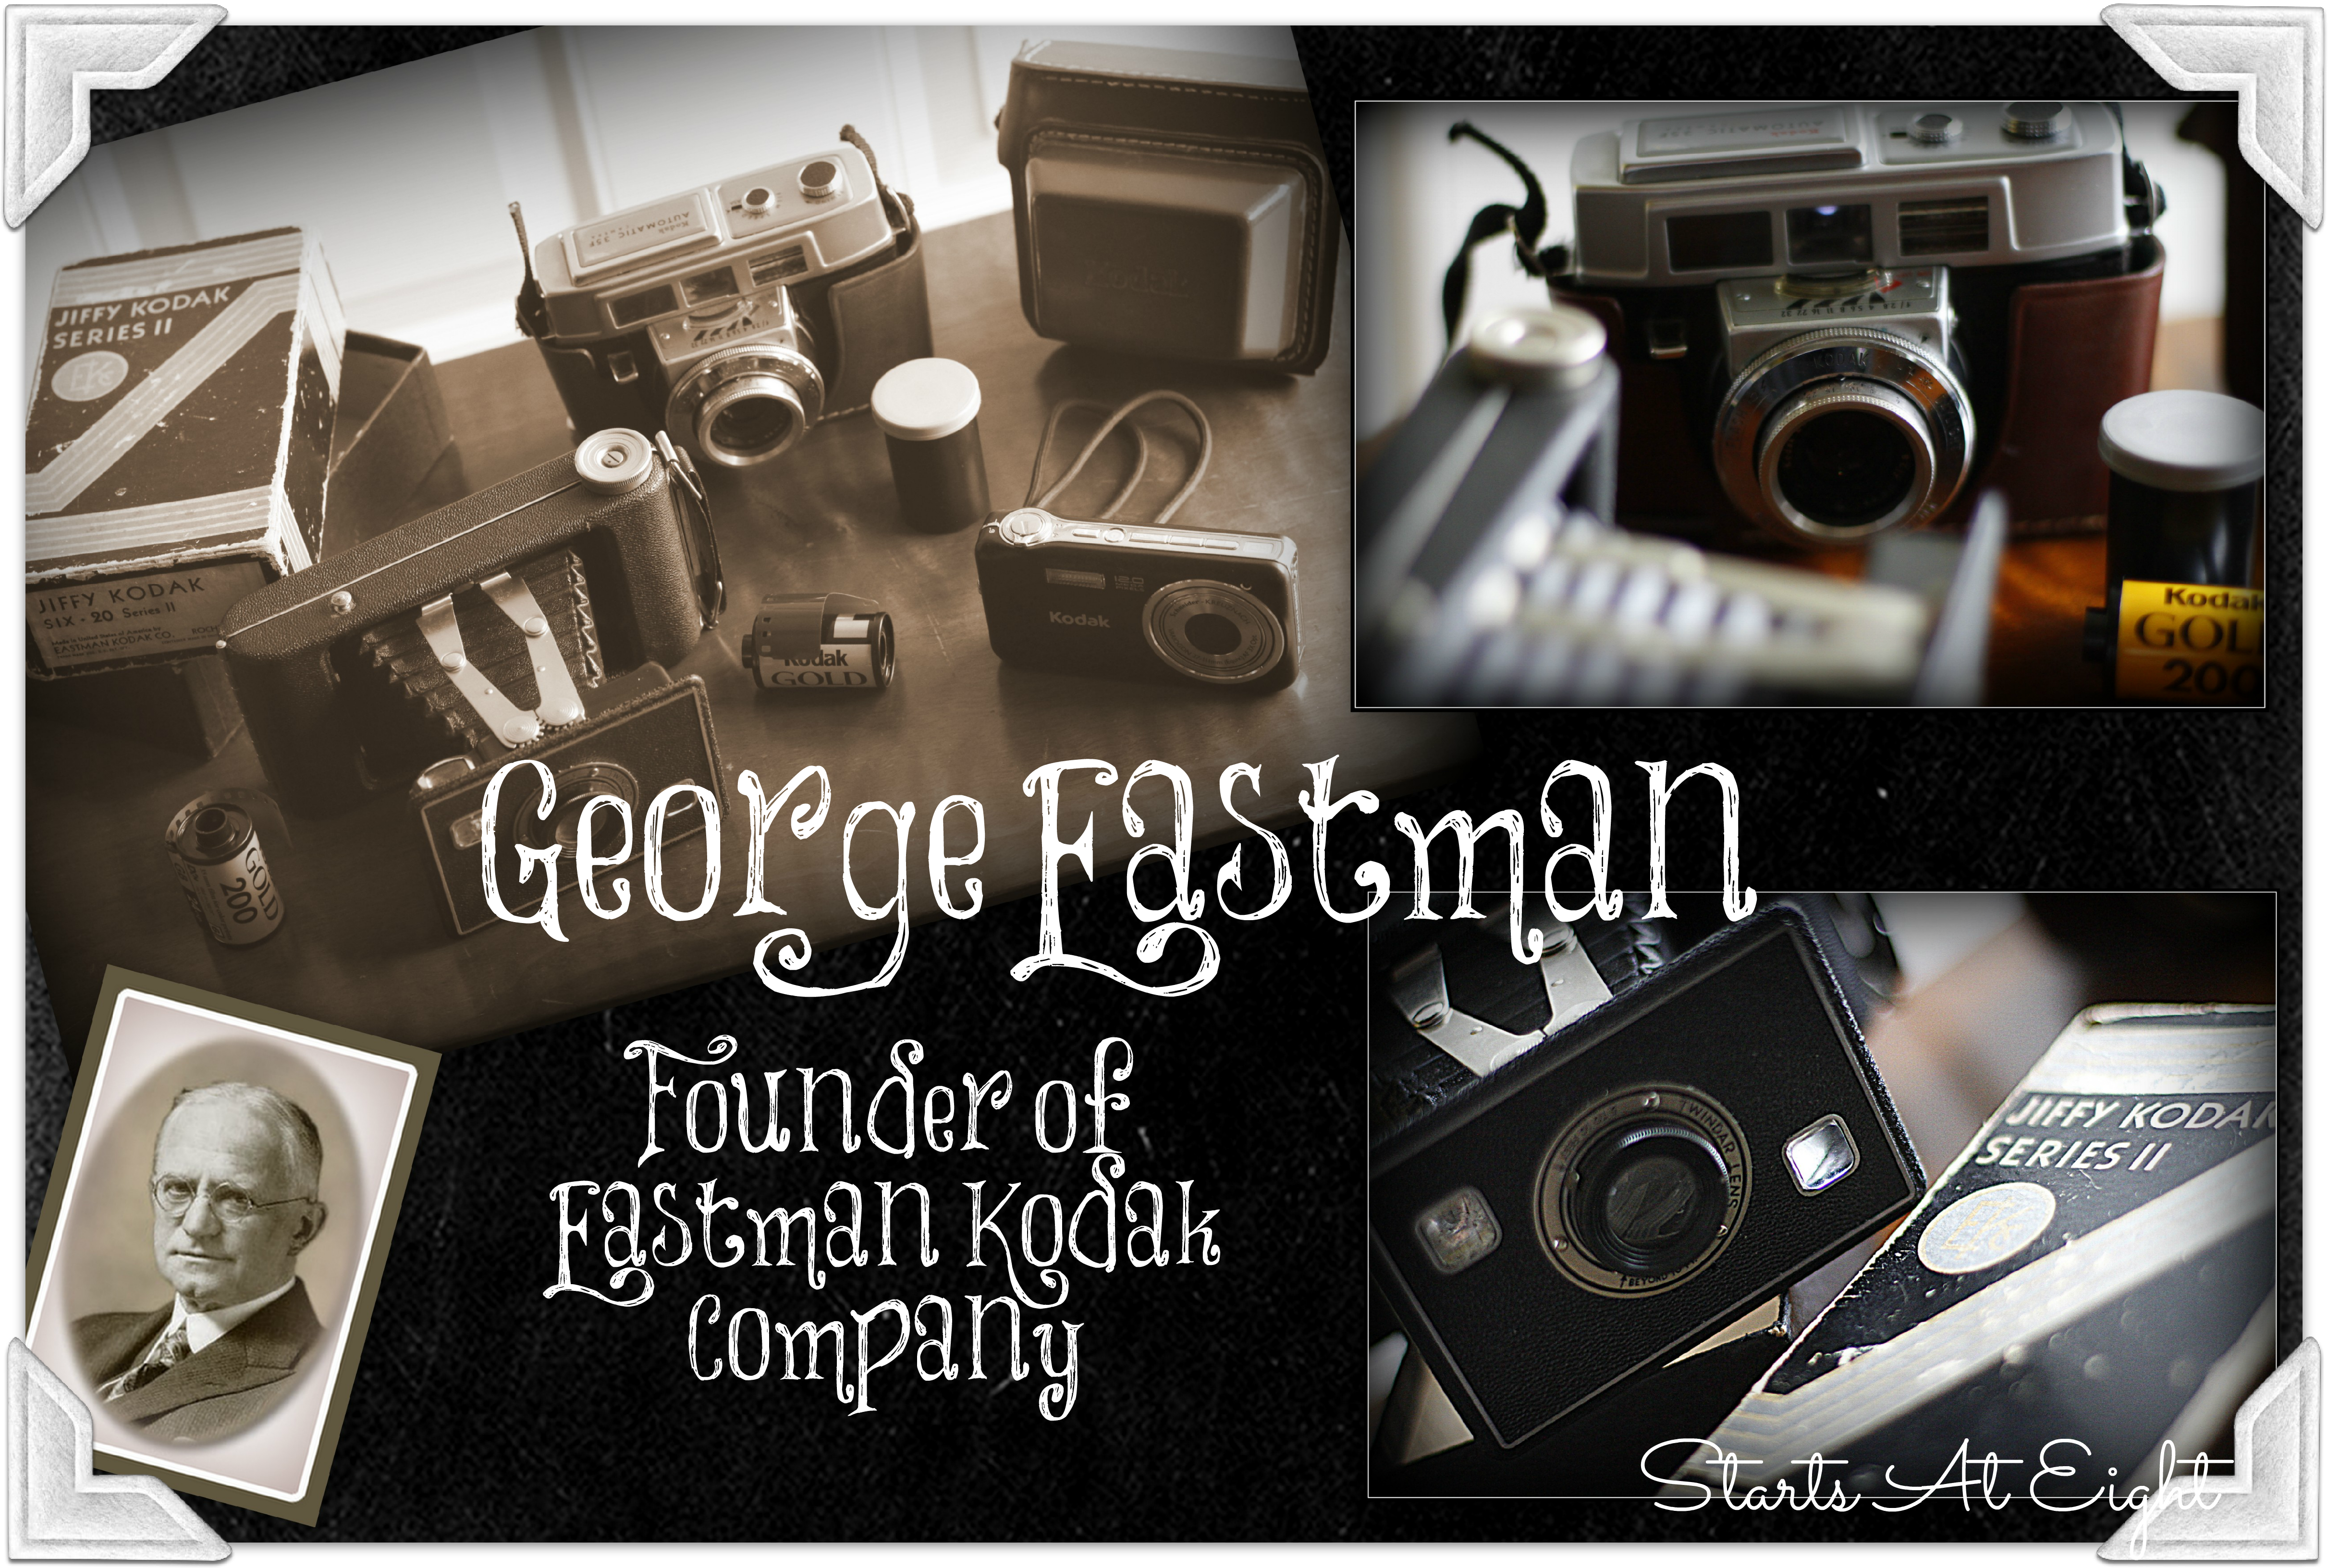 The Life of George Eastman ~ Founder of Eastman Kodak Company